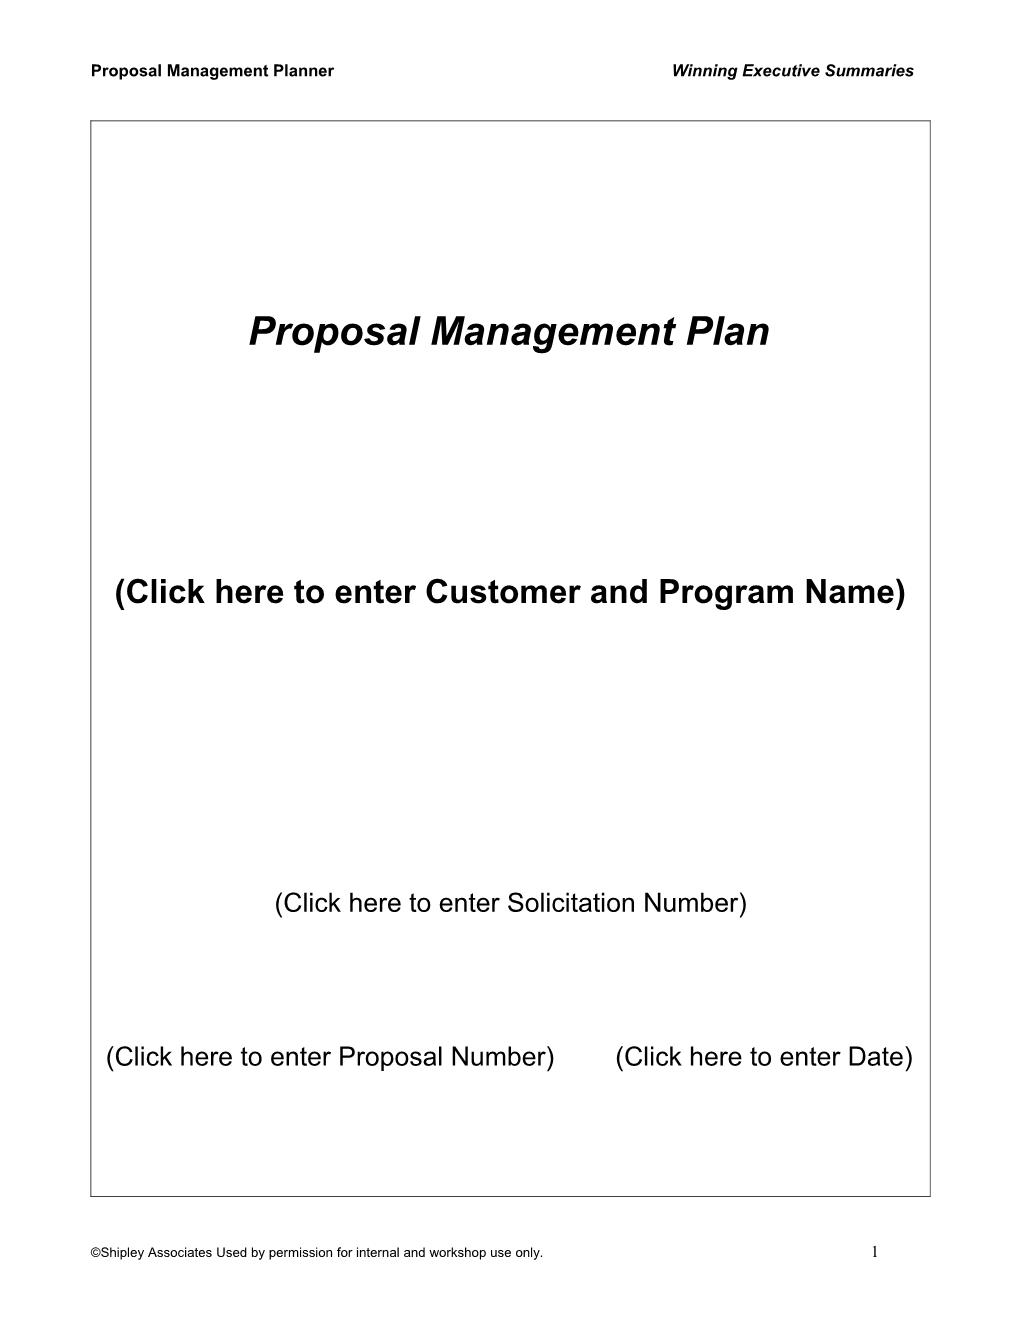 Proposal Management Plan